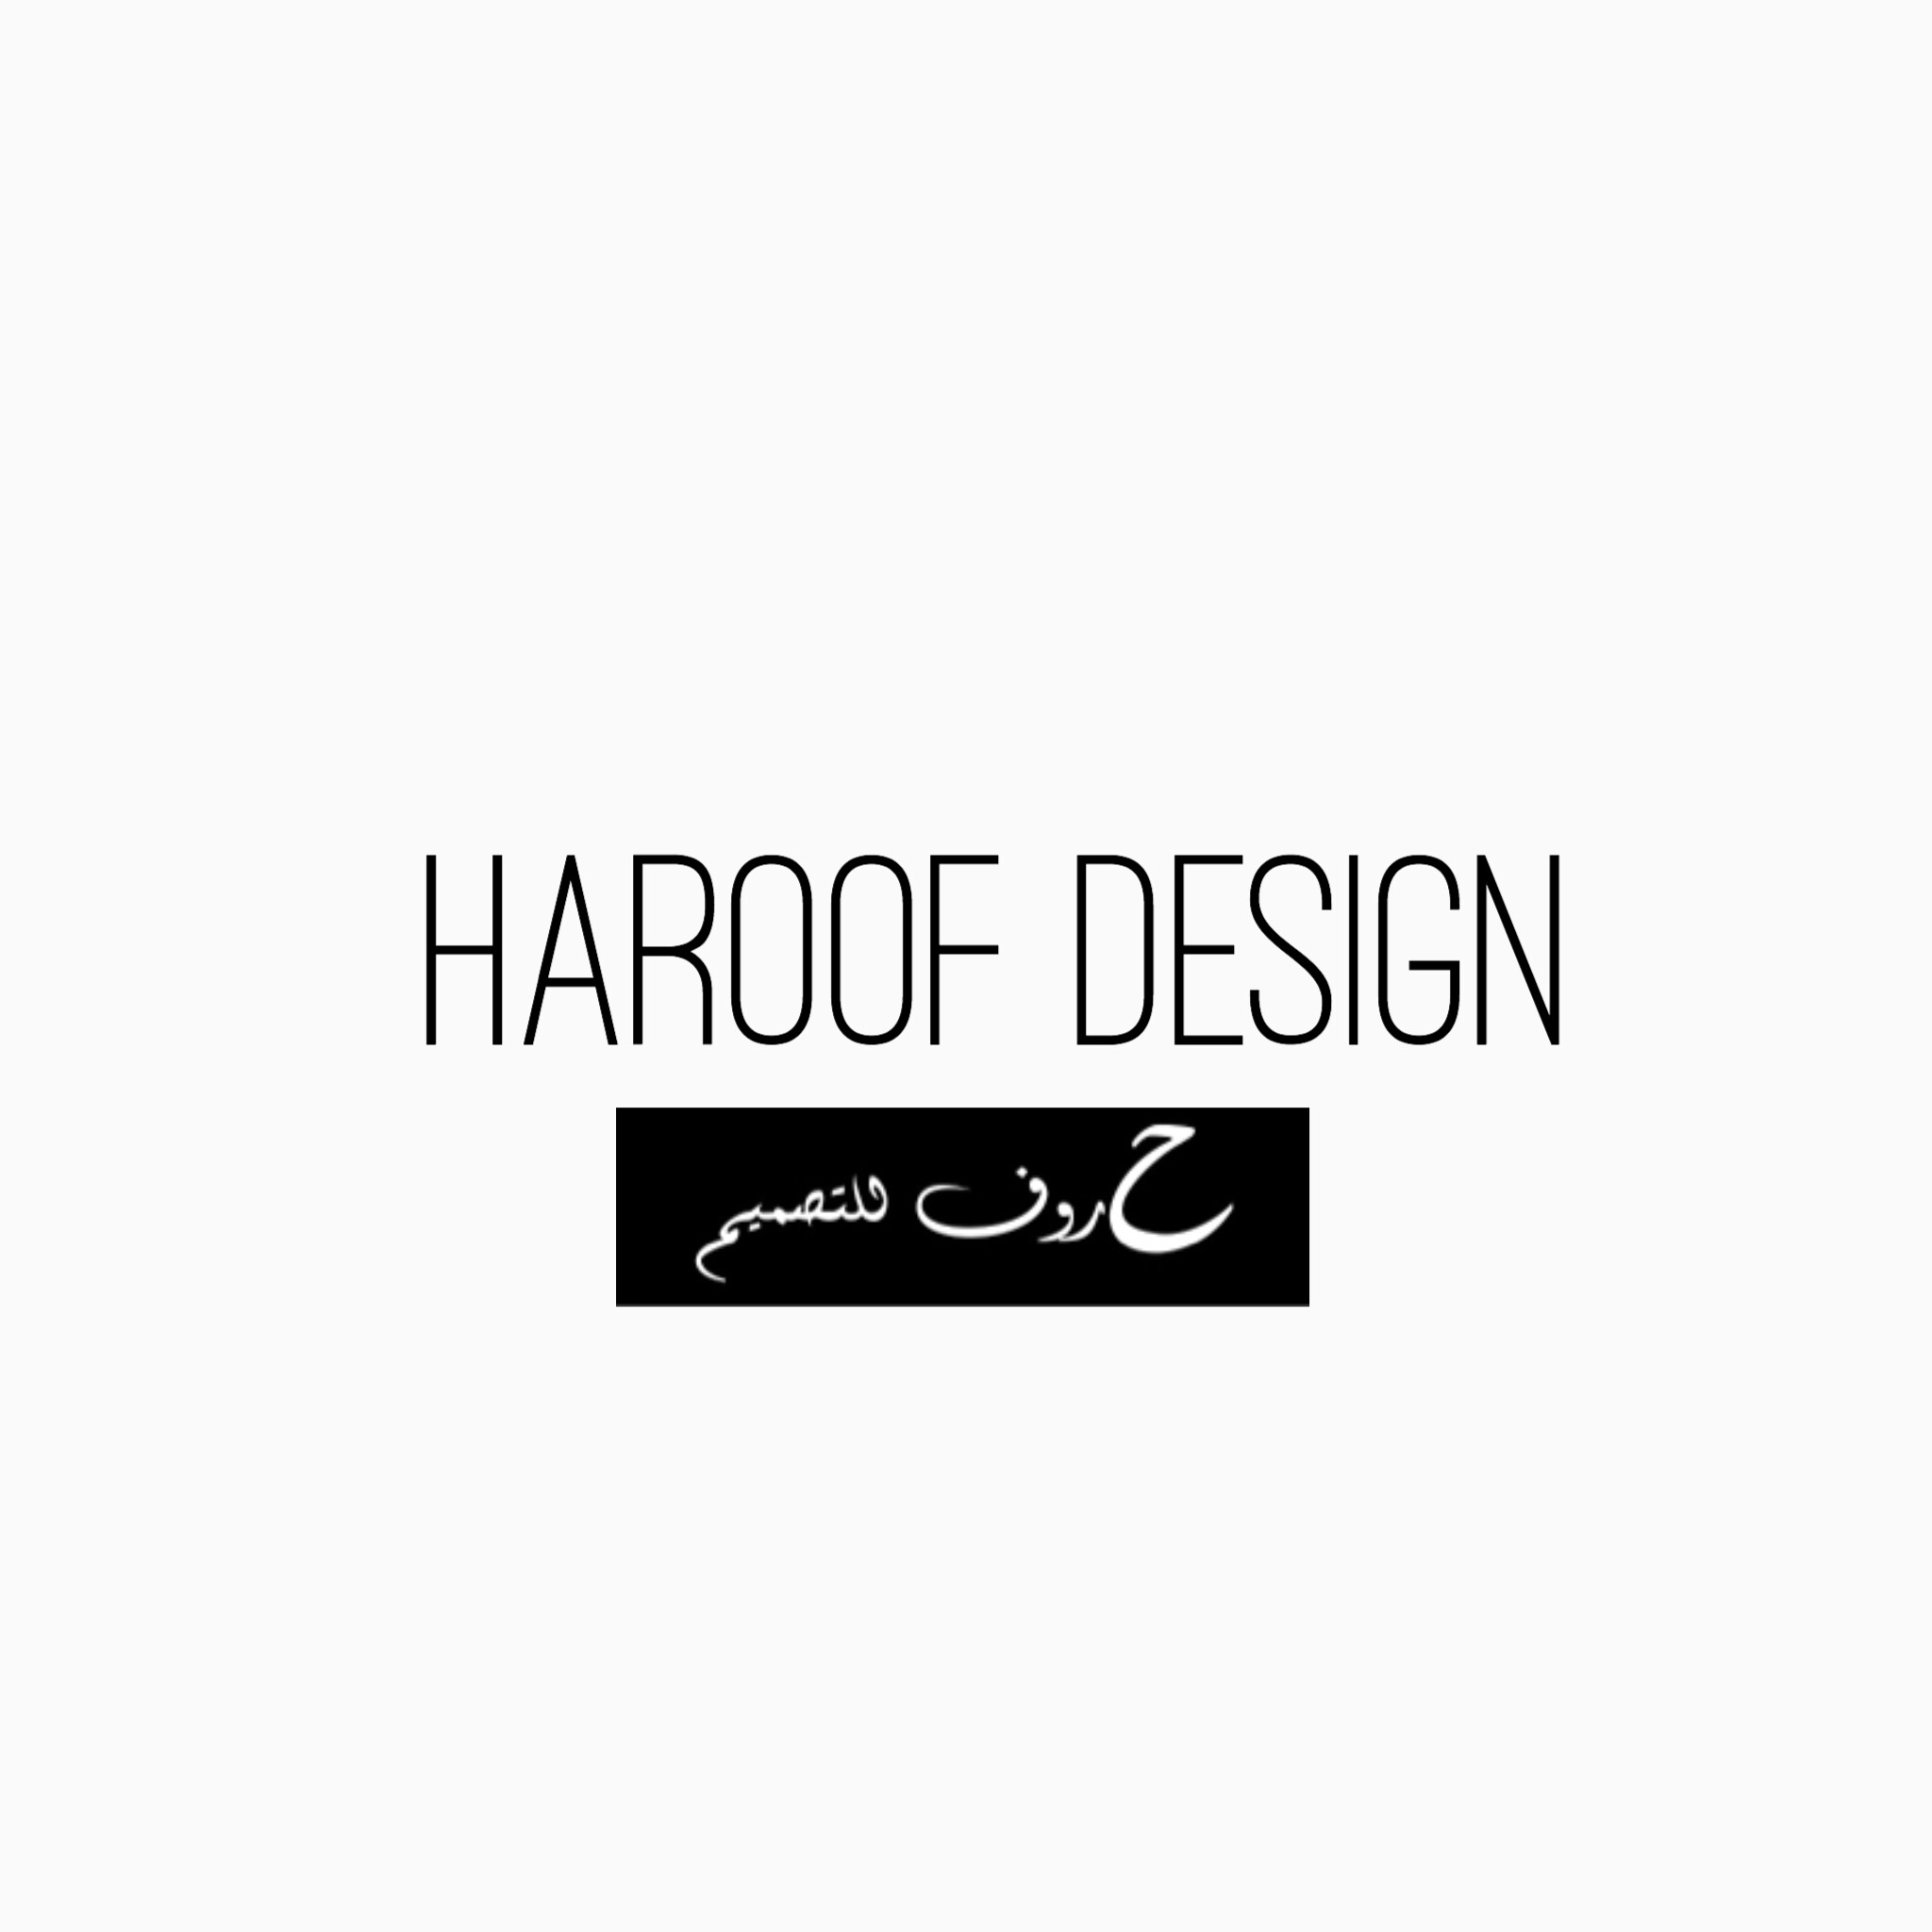 Haroof Design